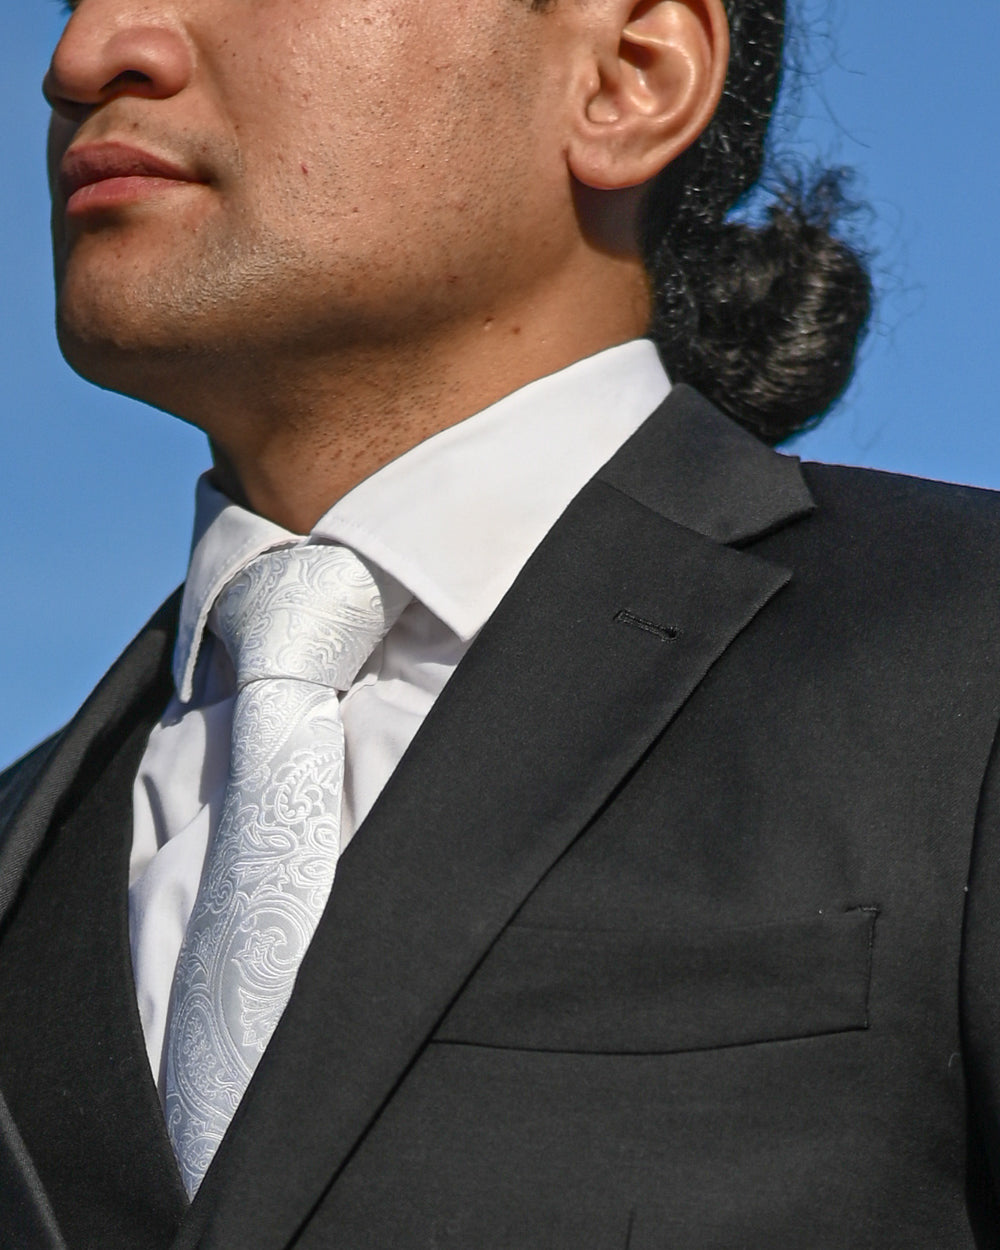 White paisley tie worn with black three-piece suit